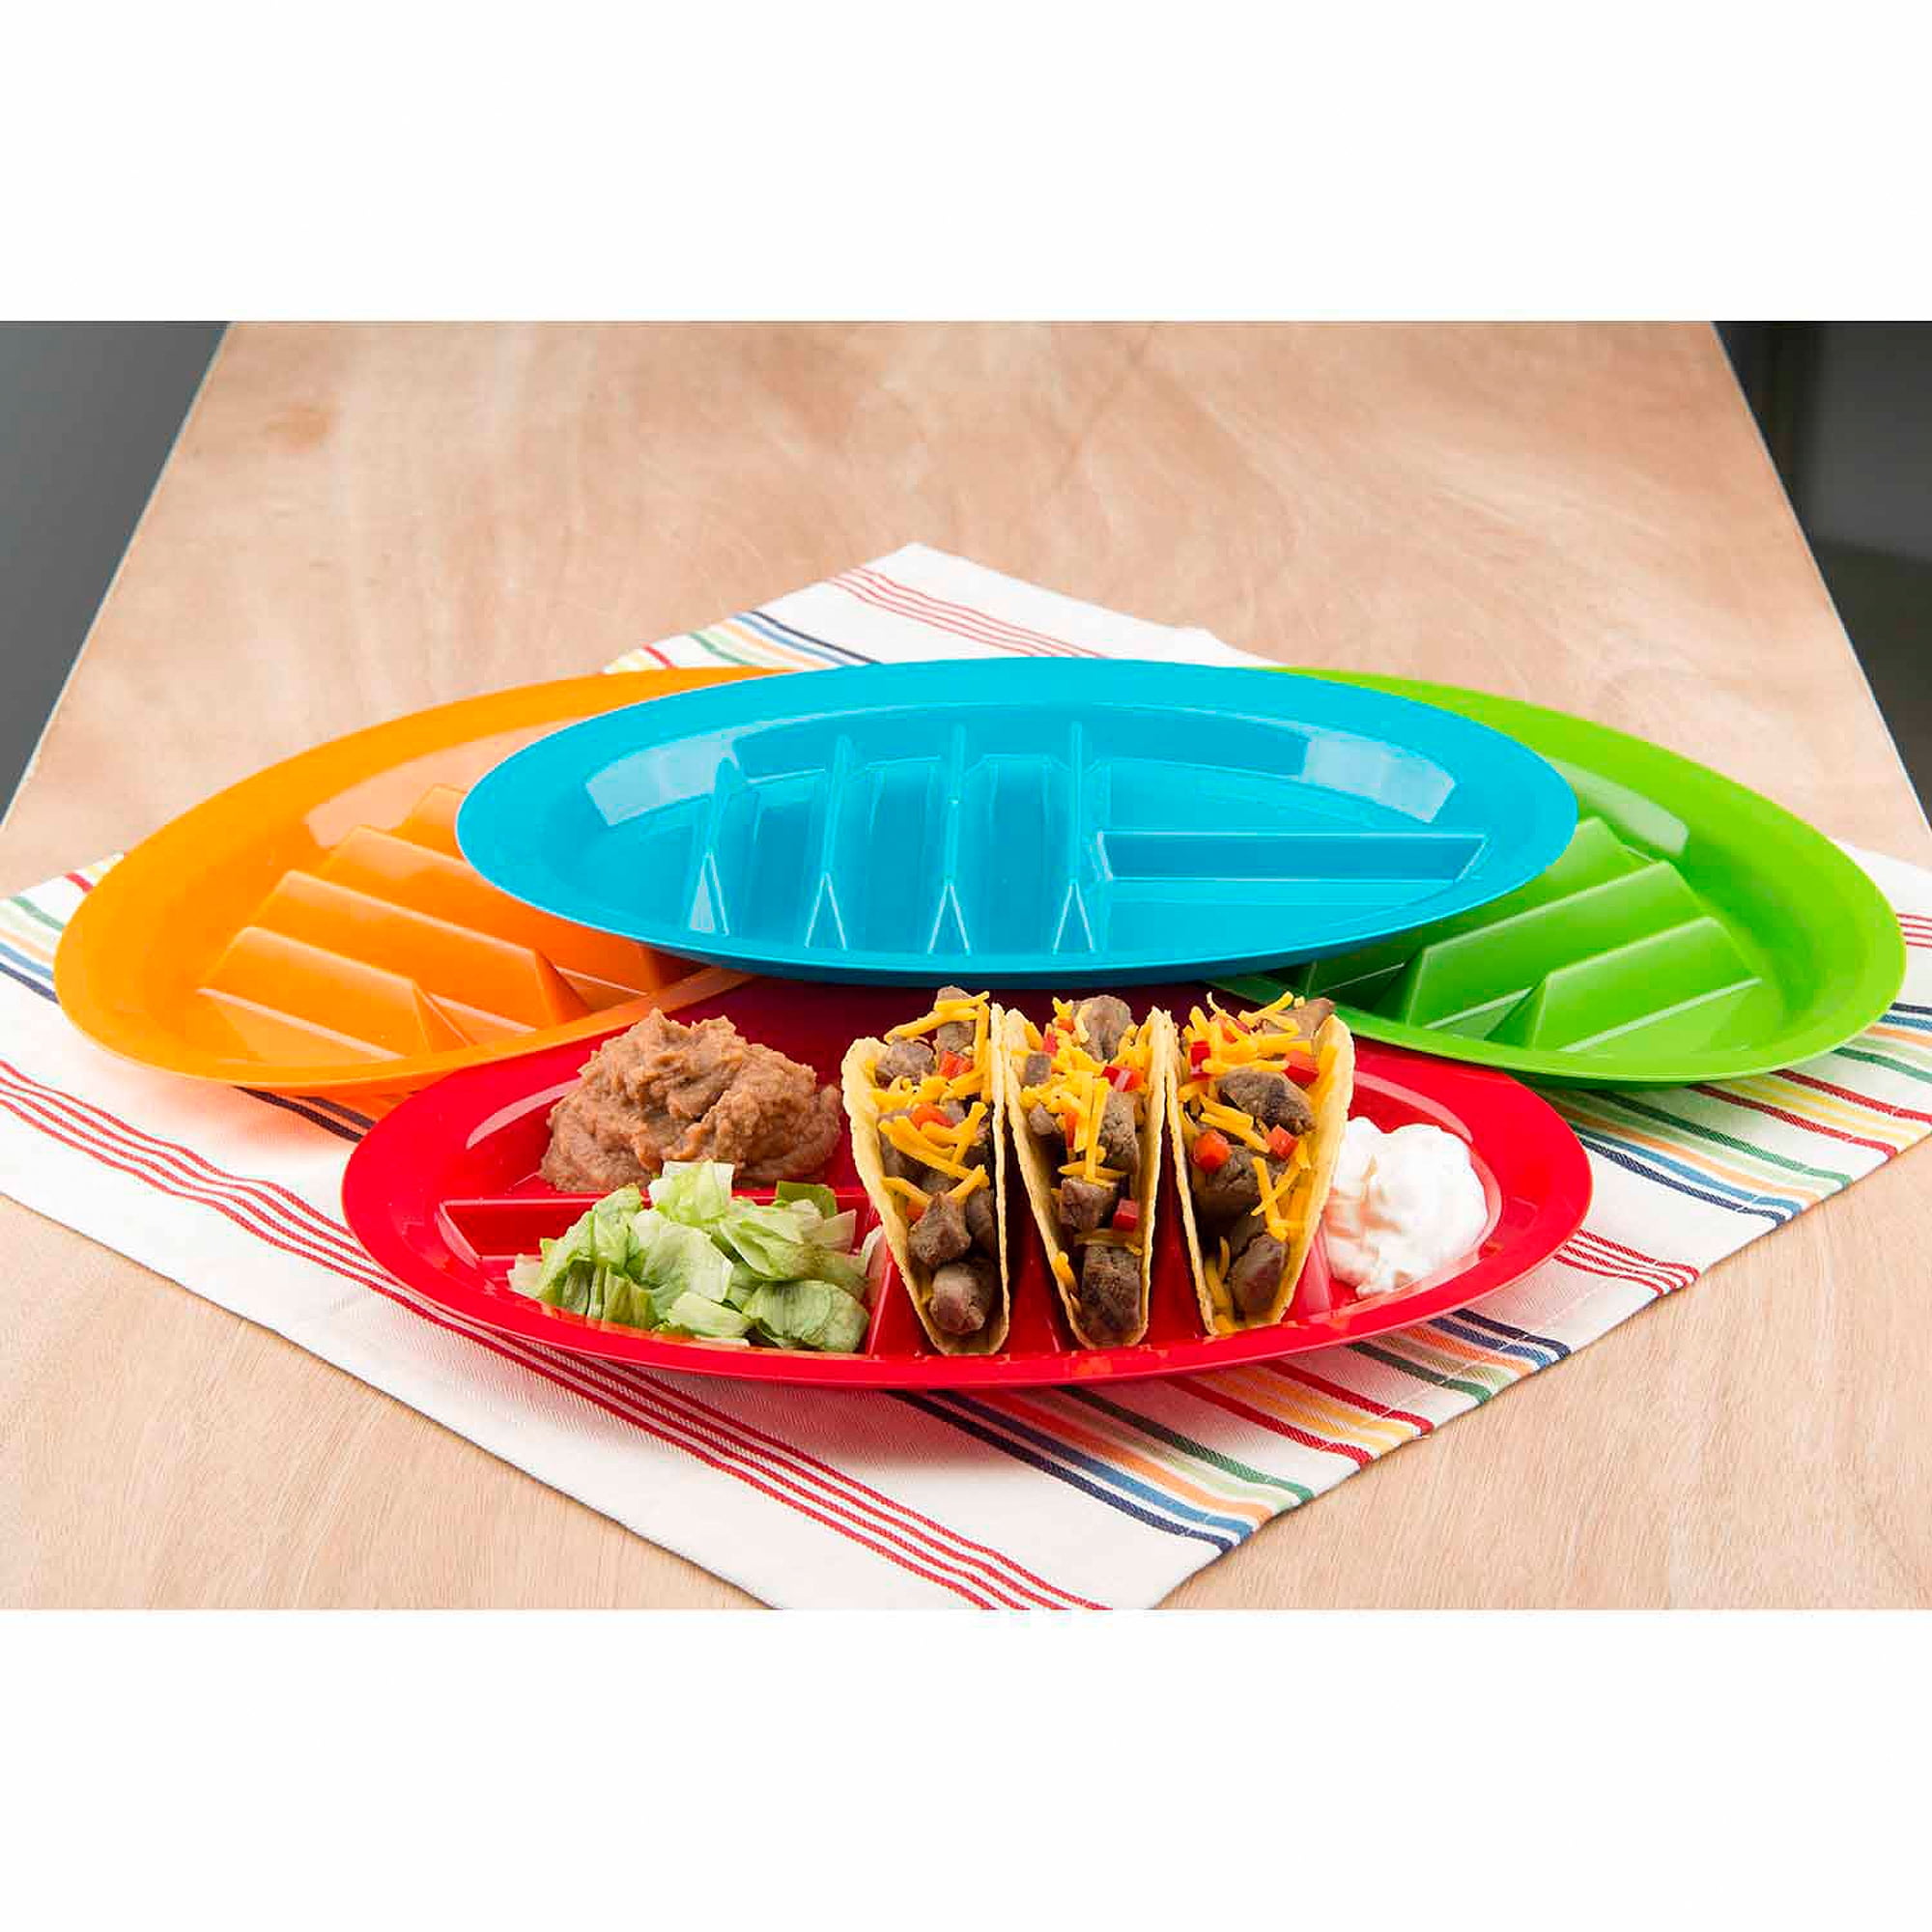 Fiesta Colored Taco Compartment Plates 4 KOVOT Taco Plates Set Includes 